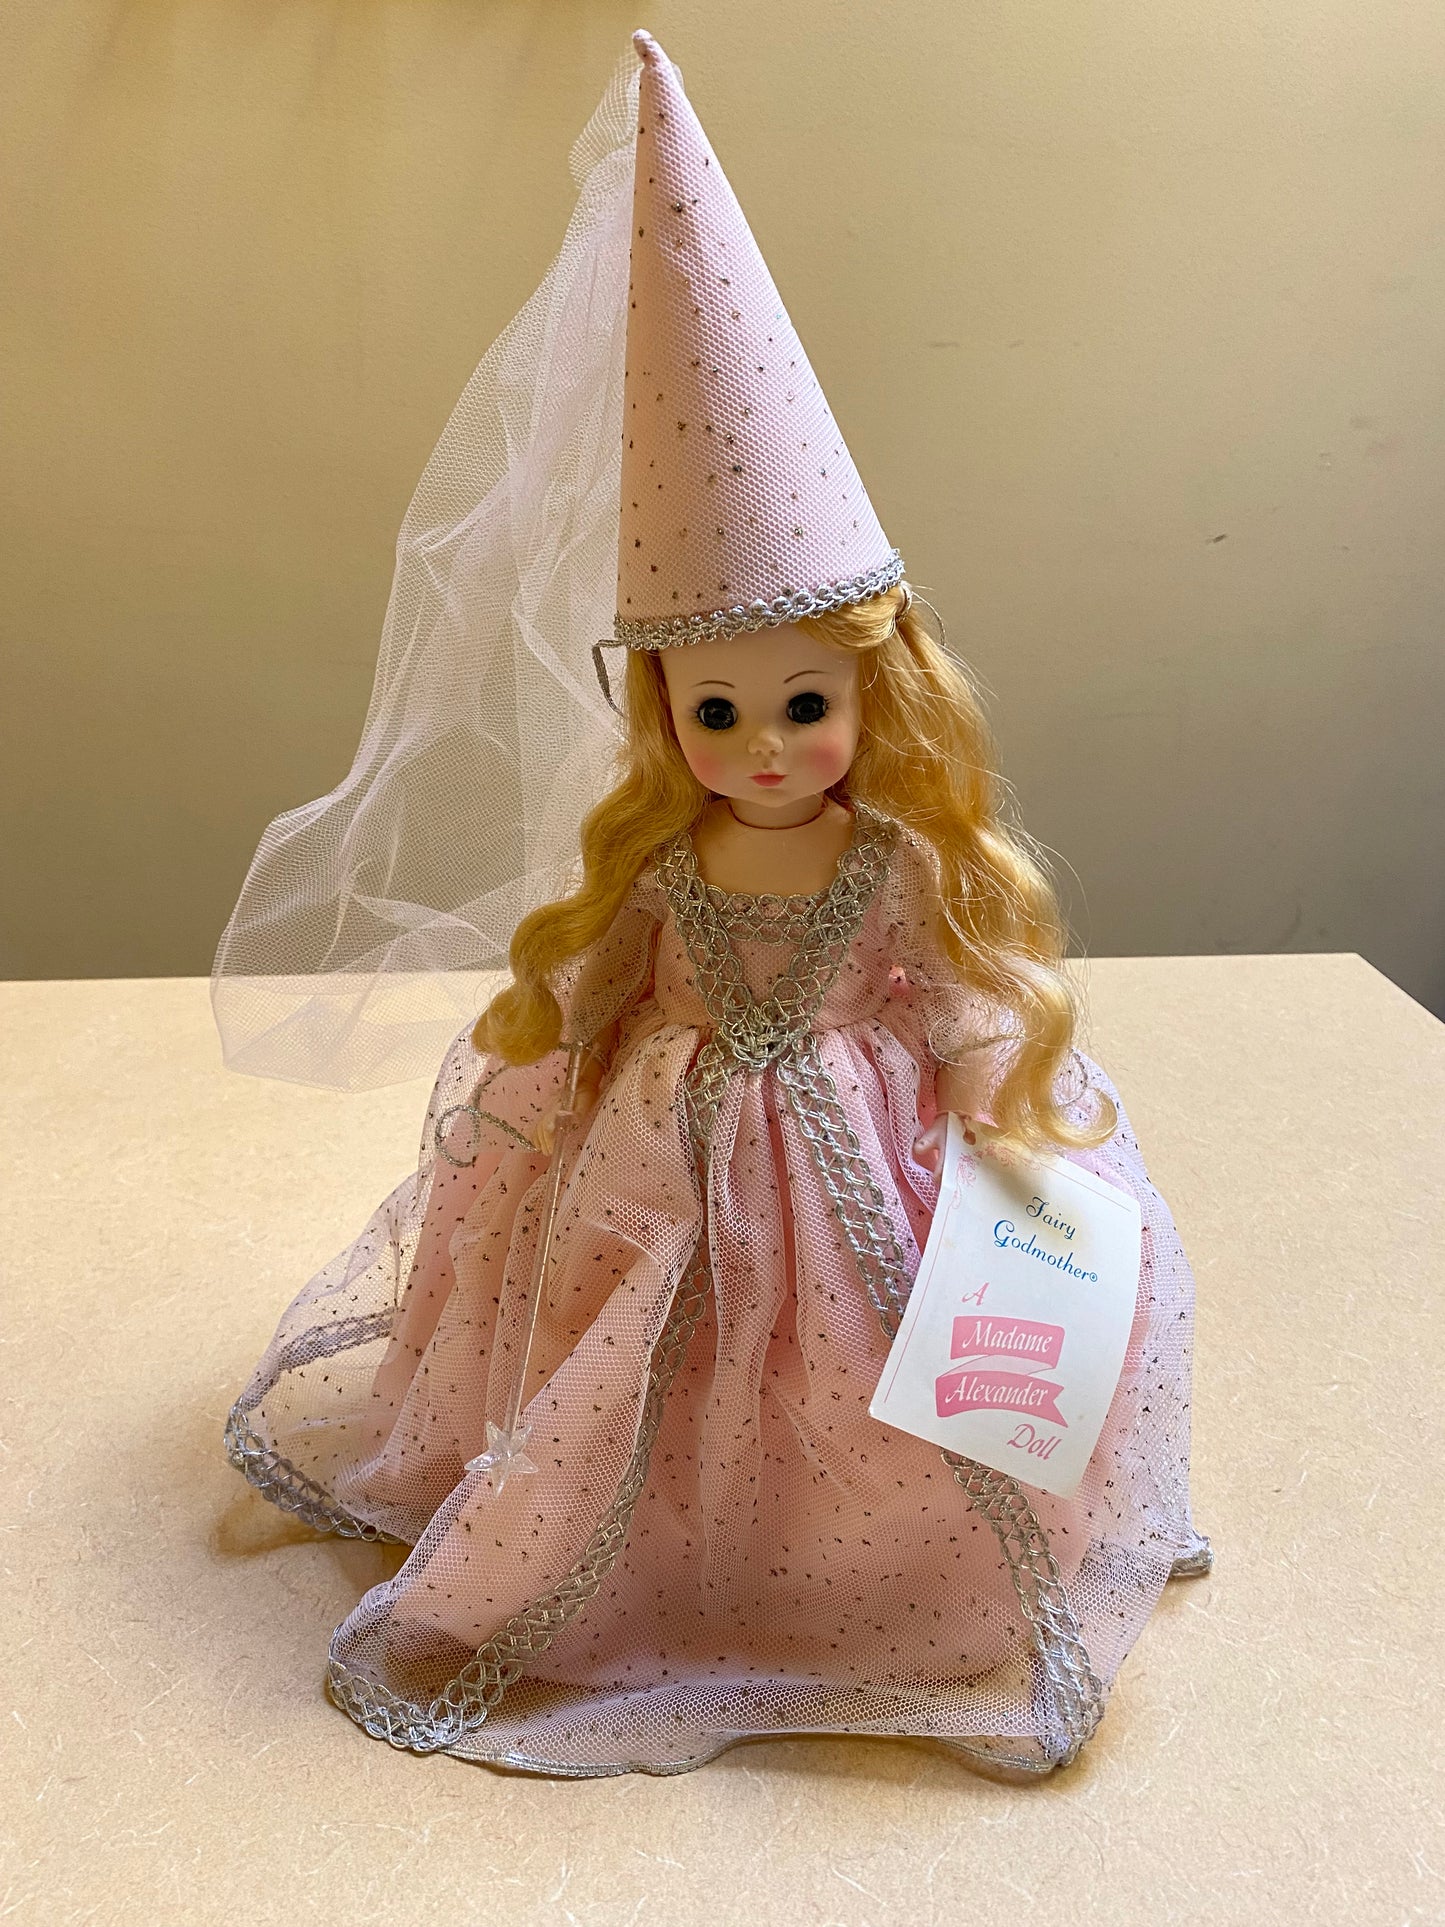 Madame Alexander's "Fairy Godmother" Doll